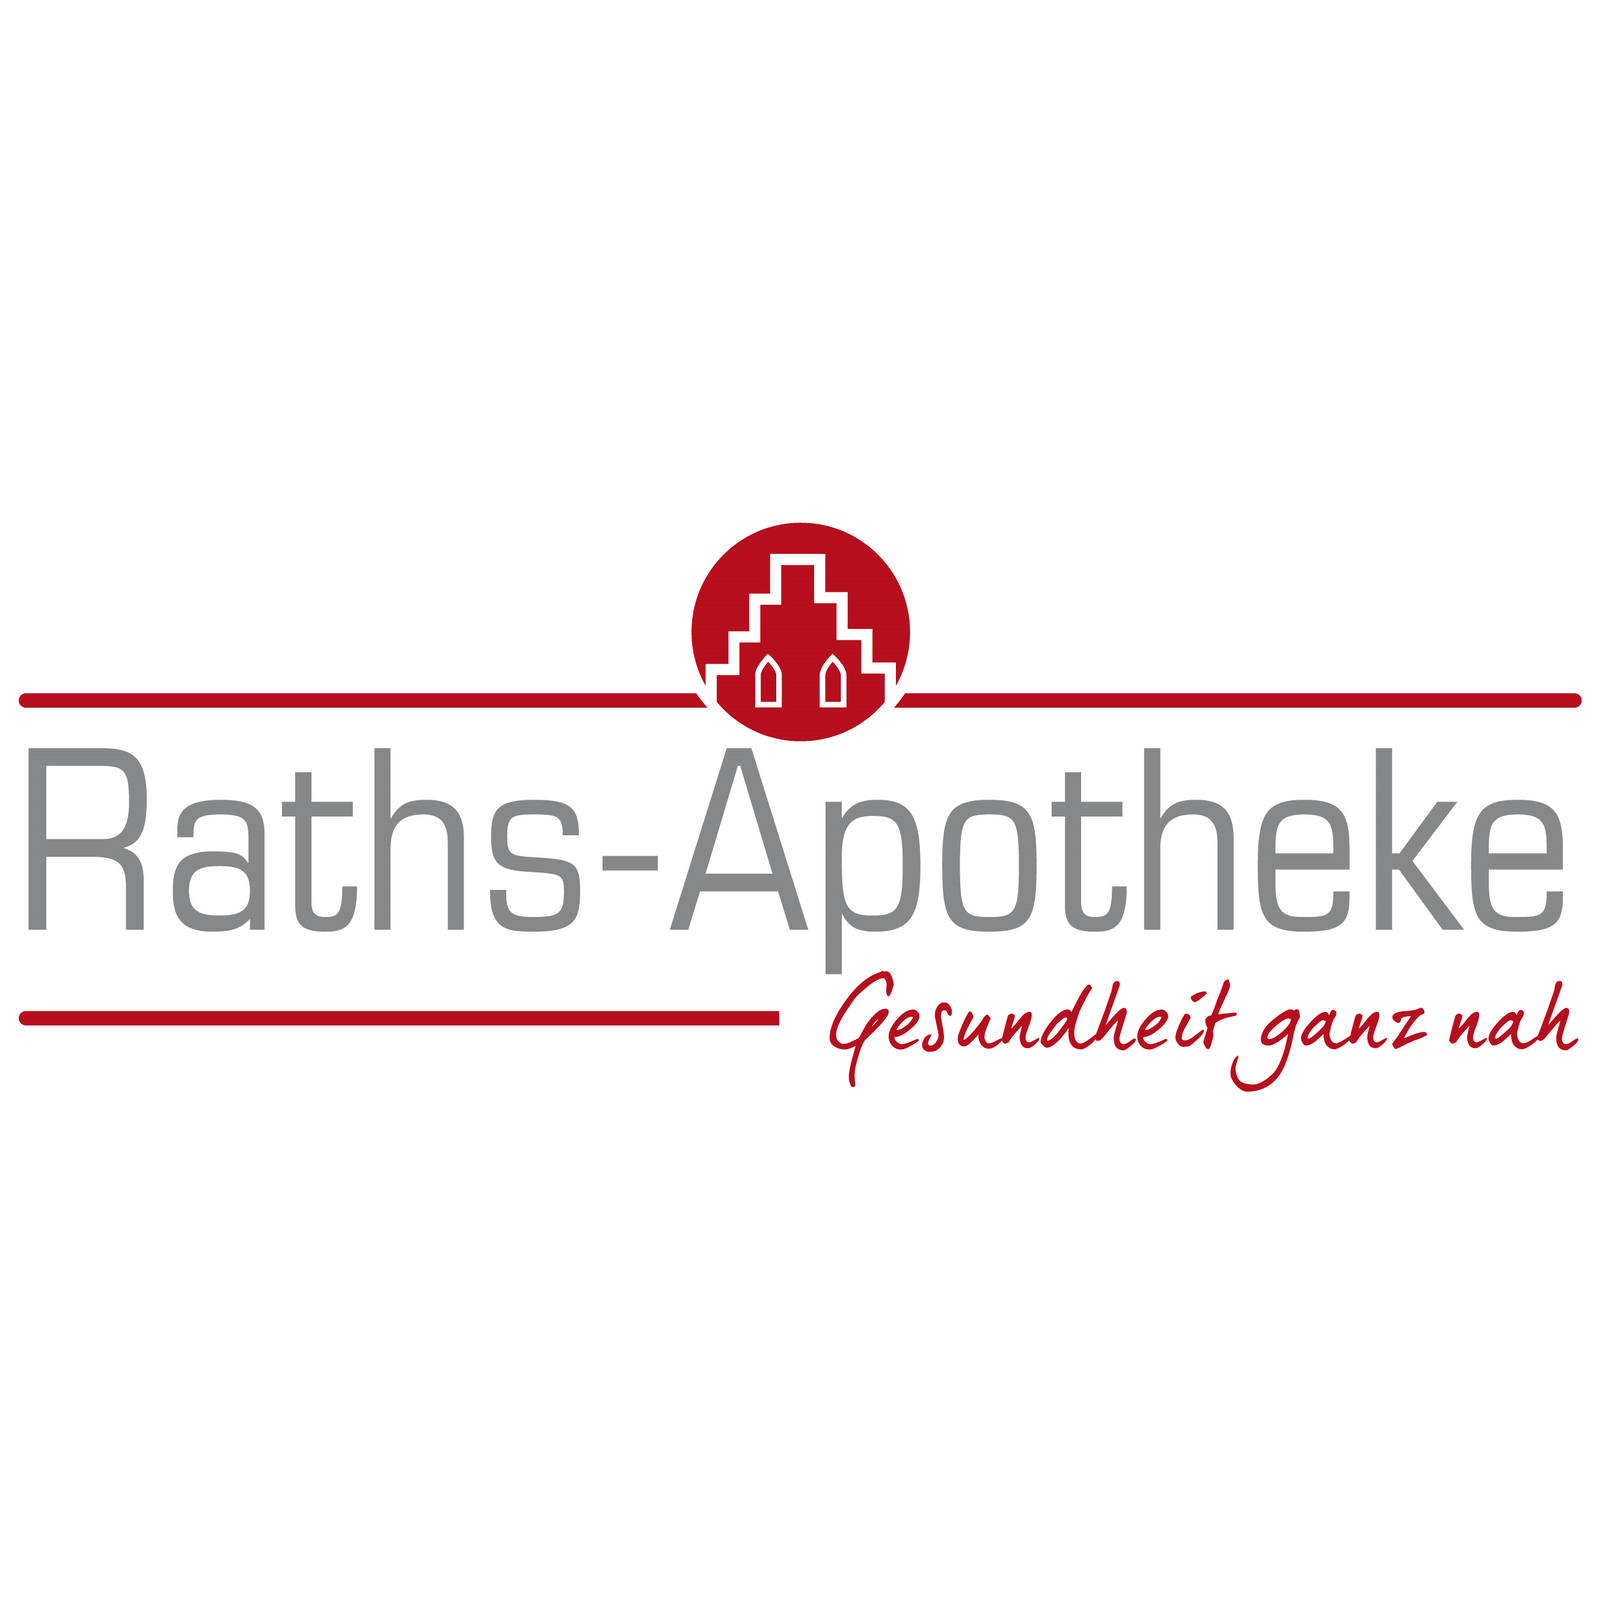 Raths-Apotheke Logo